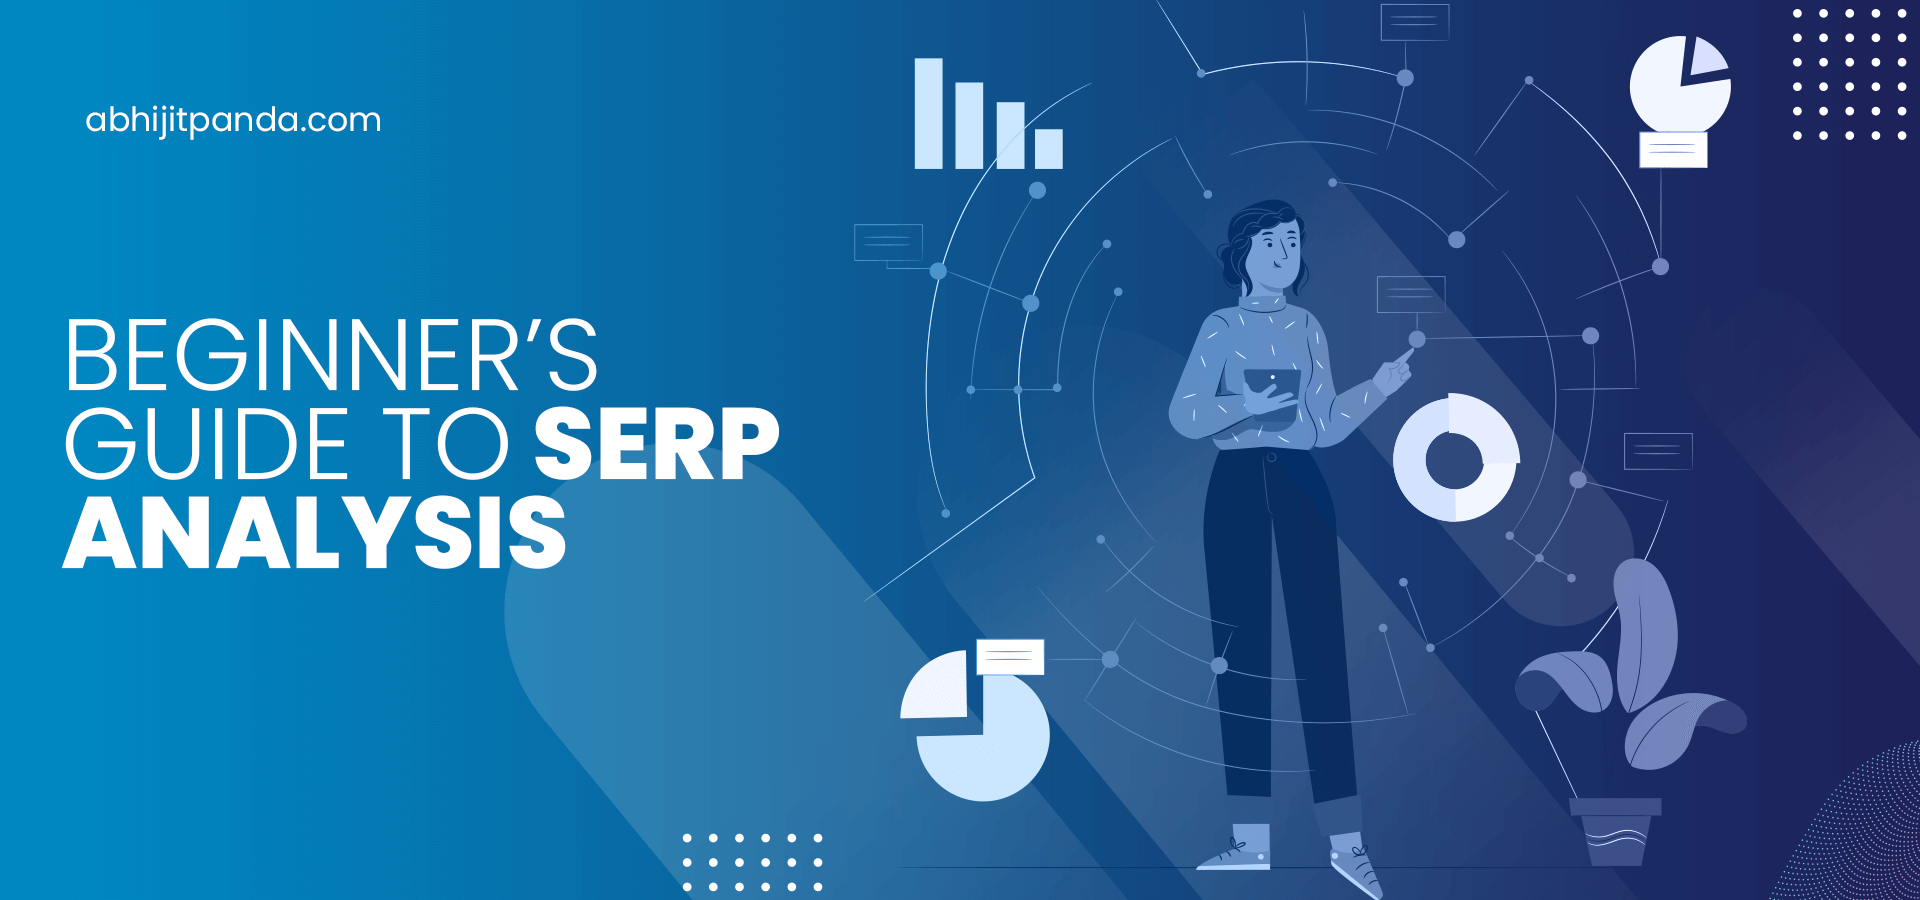 A Beginner’s Guide to SERP Analysis